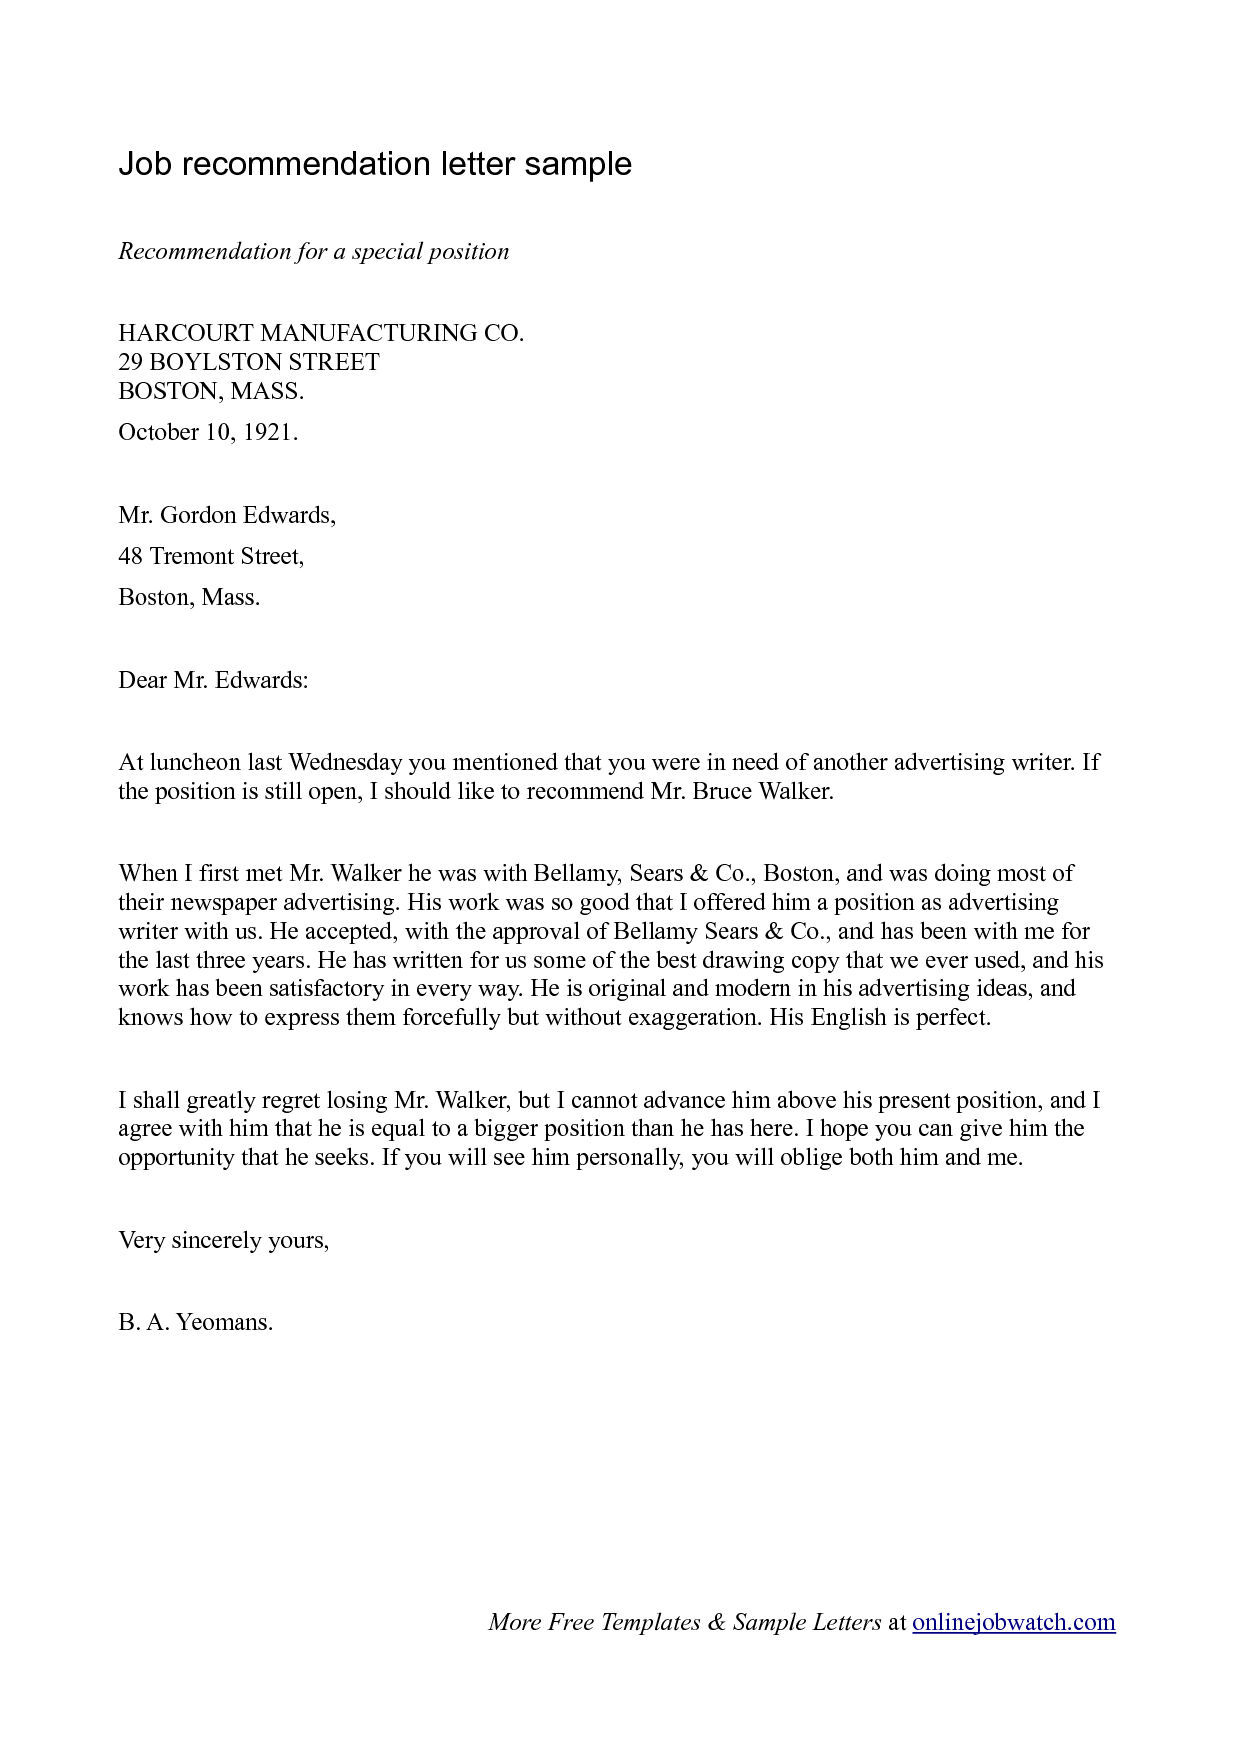 Job recommendation letter format